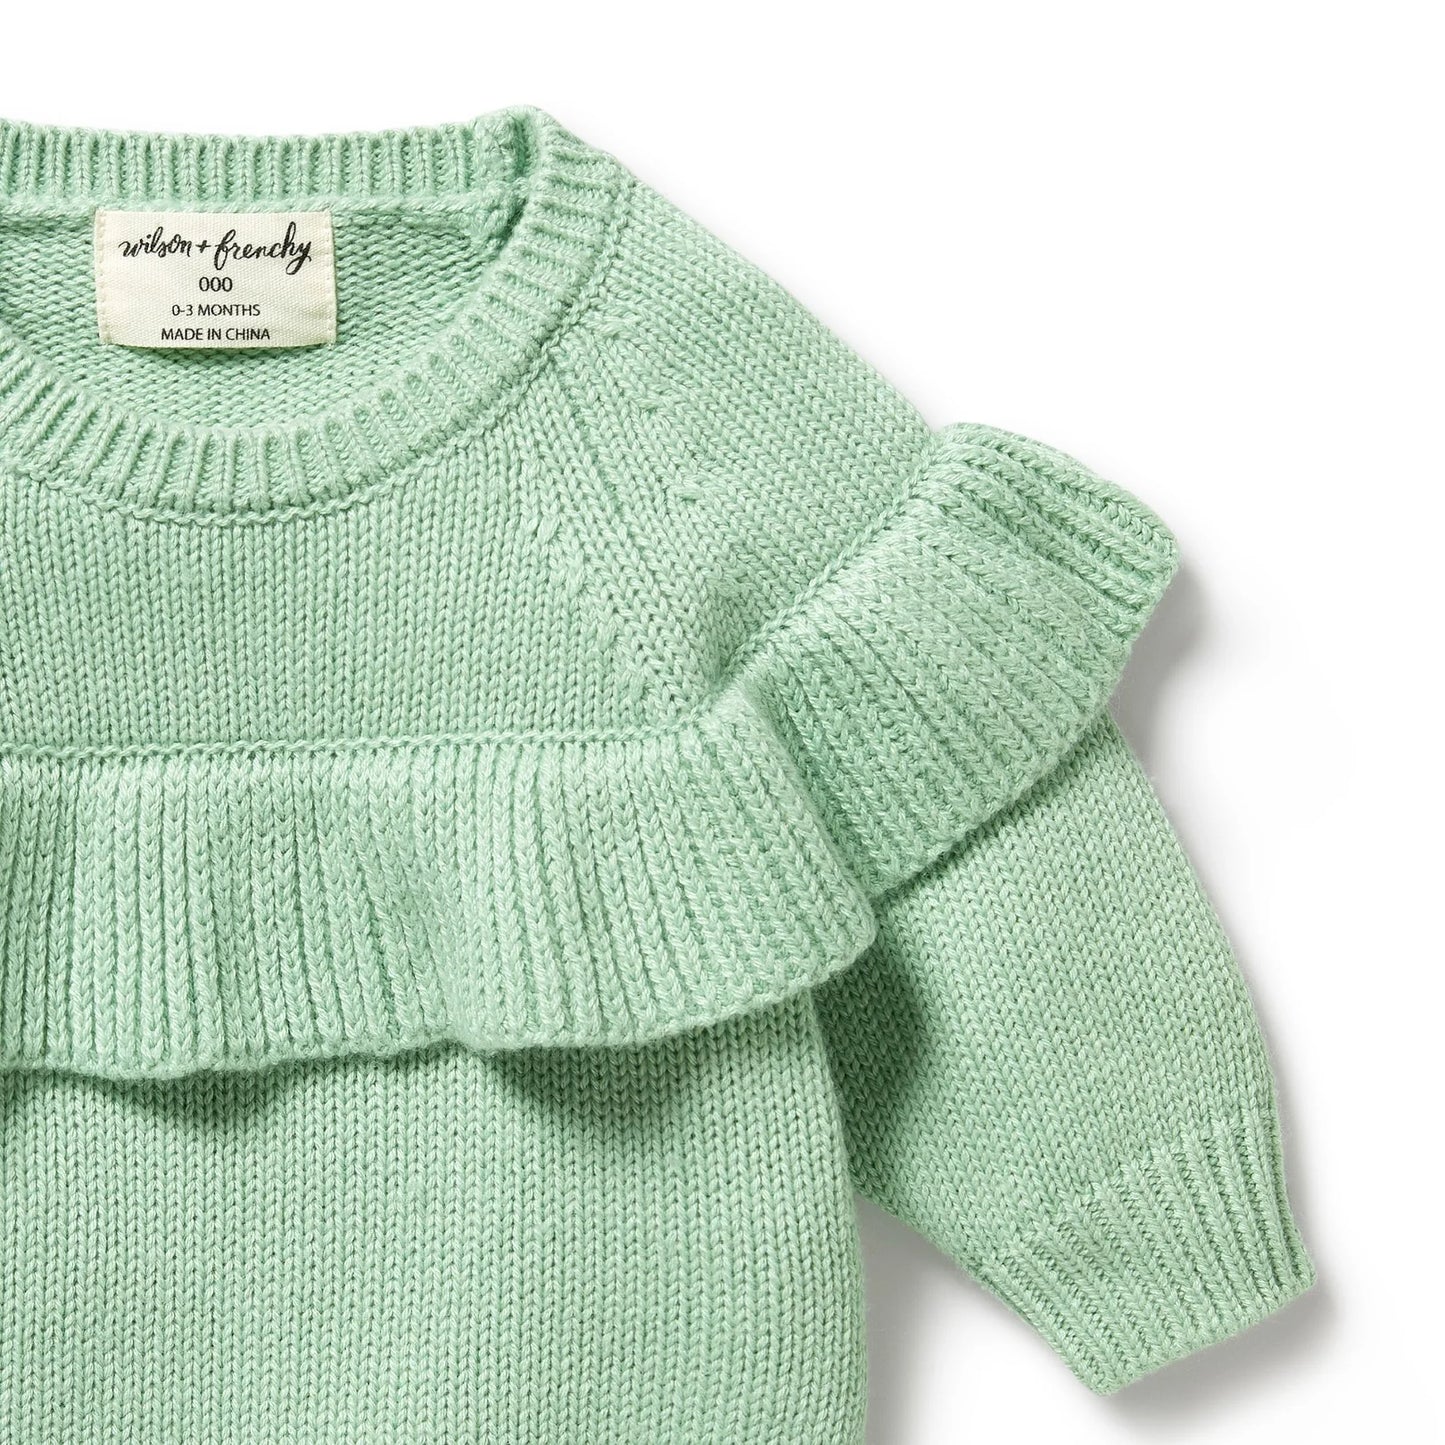 Knitted Ruffle Jumper - Mint Green